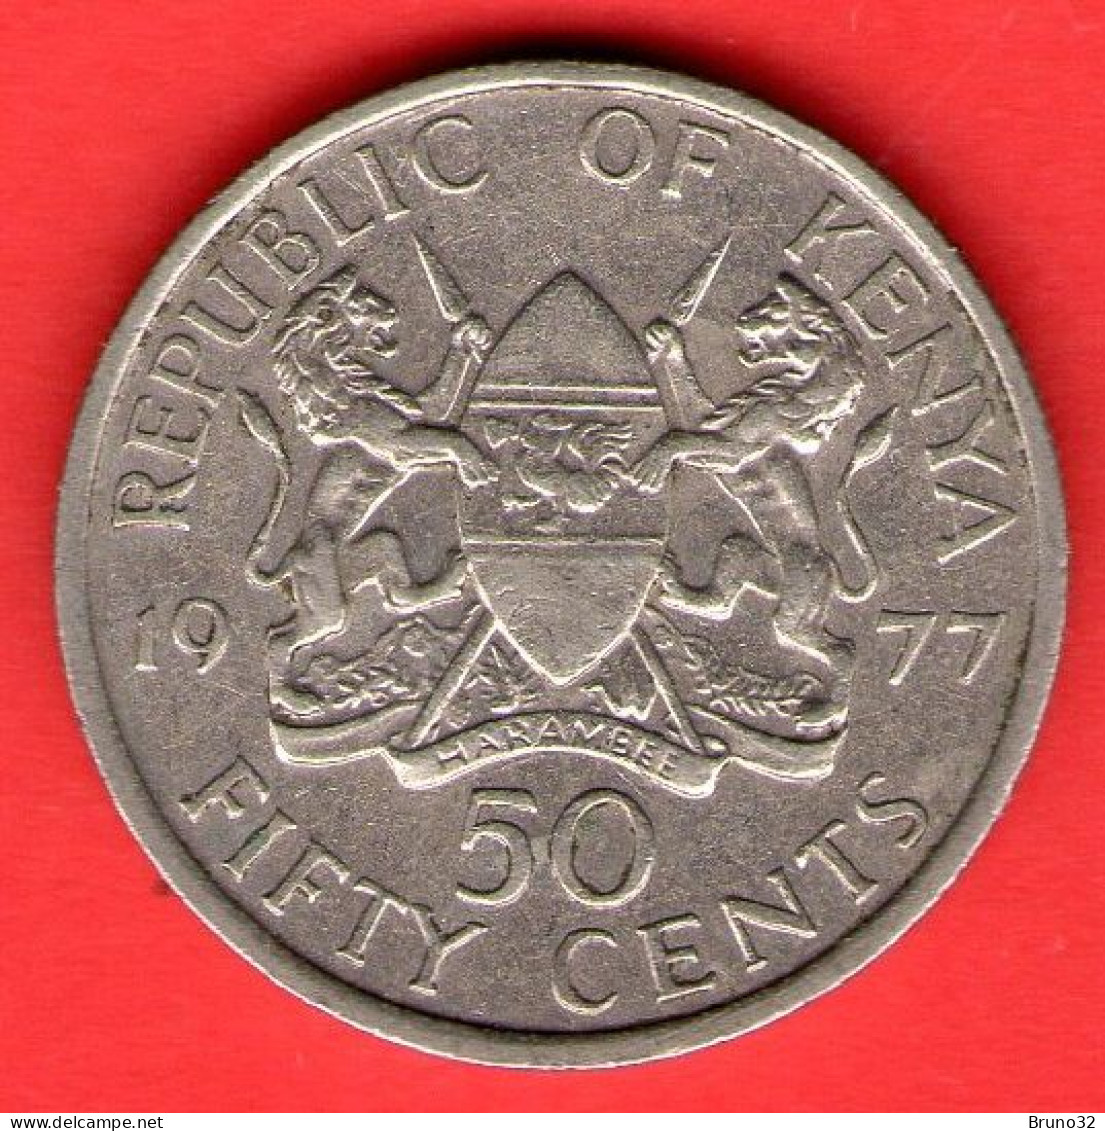 Kenia - Kenya - 1977 - 50 Cents - SPL/XF - Come Da Foto - Kenia